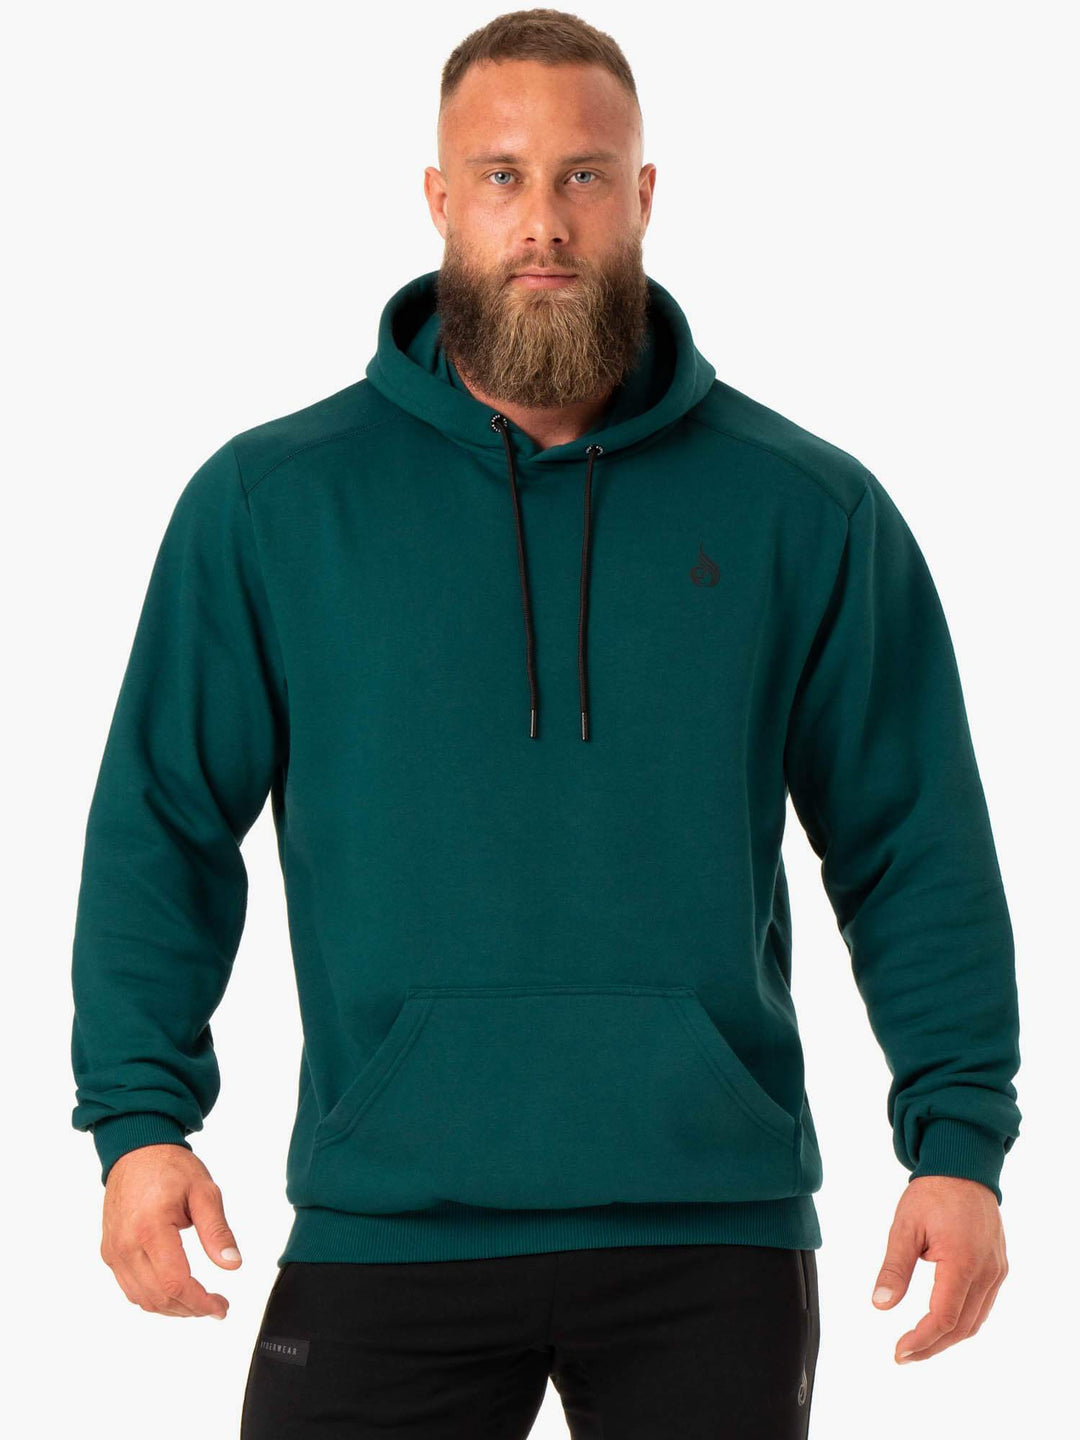 Reset Pullover Hoodie - Emerald Clothing Ryderwear 